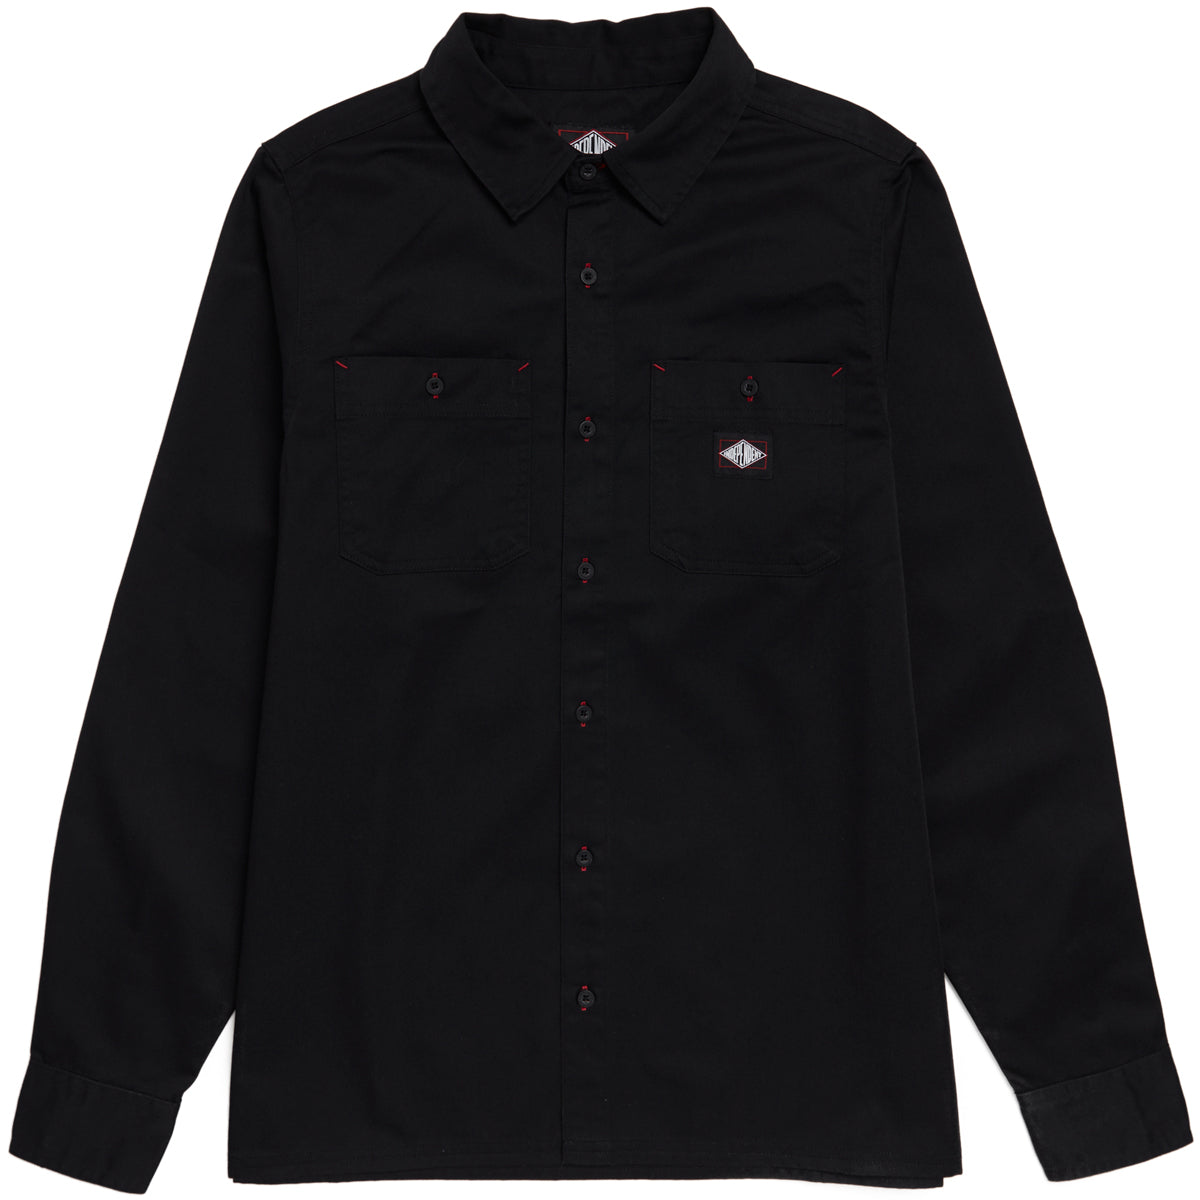 Independent Kirby Long SLeeve Work Shirt - Black image 1